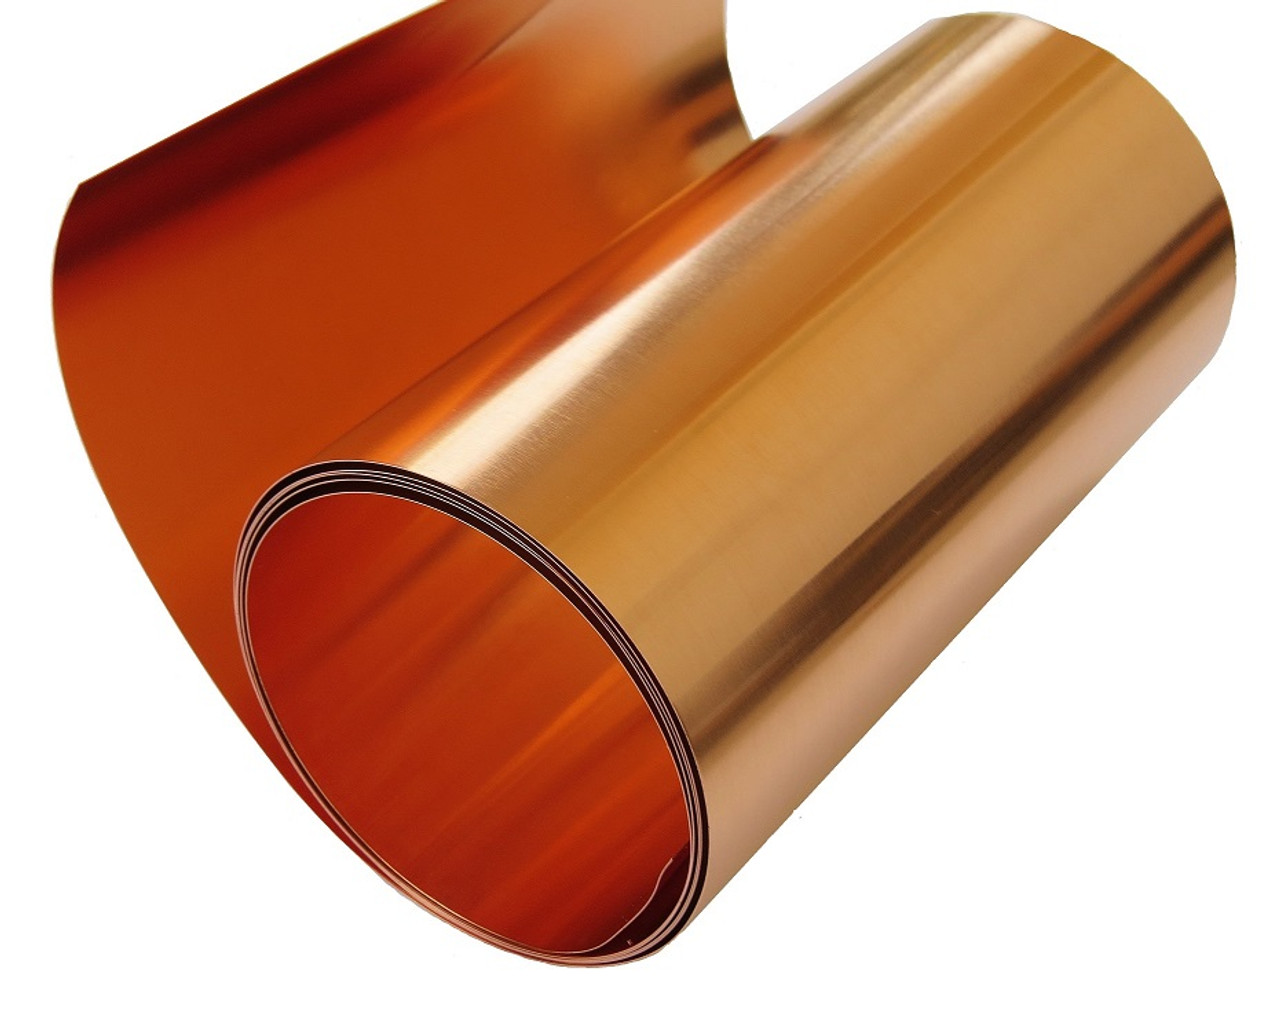 1 Mil/ 6 X 8' Copper Roll | Basic Copper